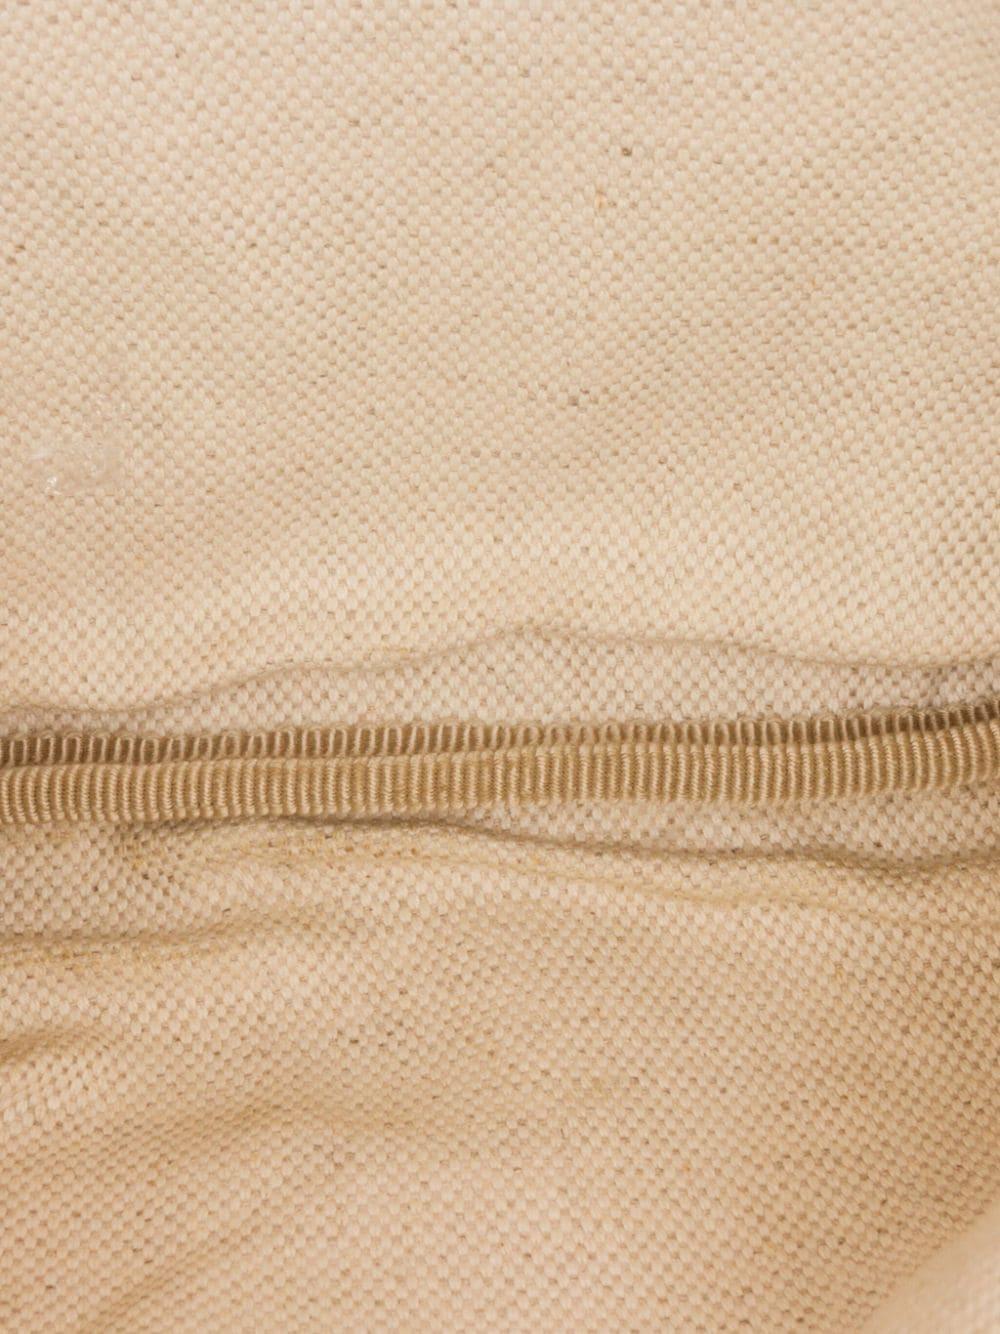 Women's or Men's Gucci White Textured Leather Logo-printed Sylvie Web Belt Bag